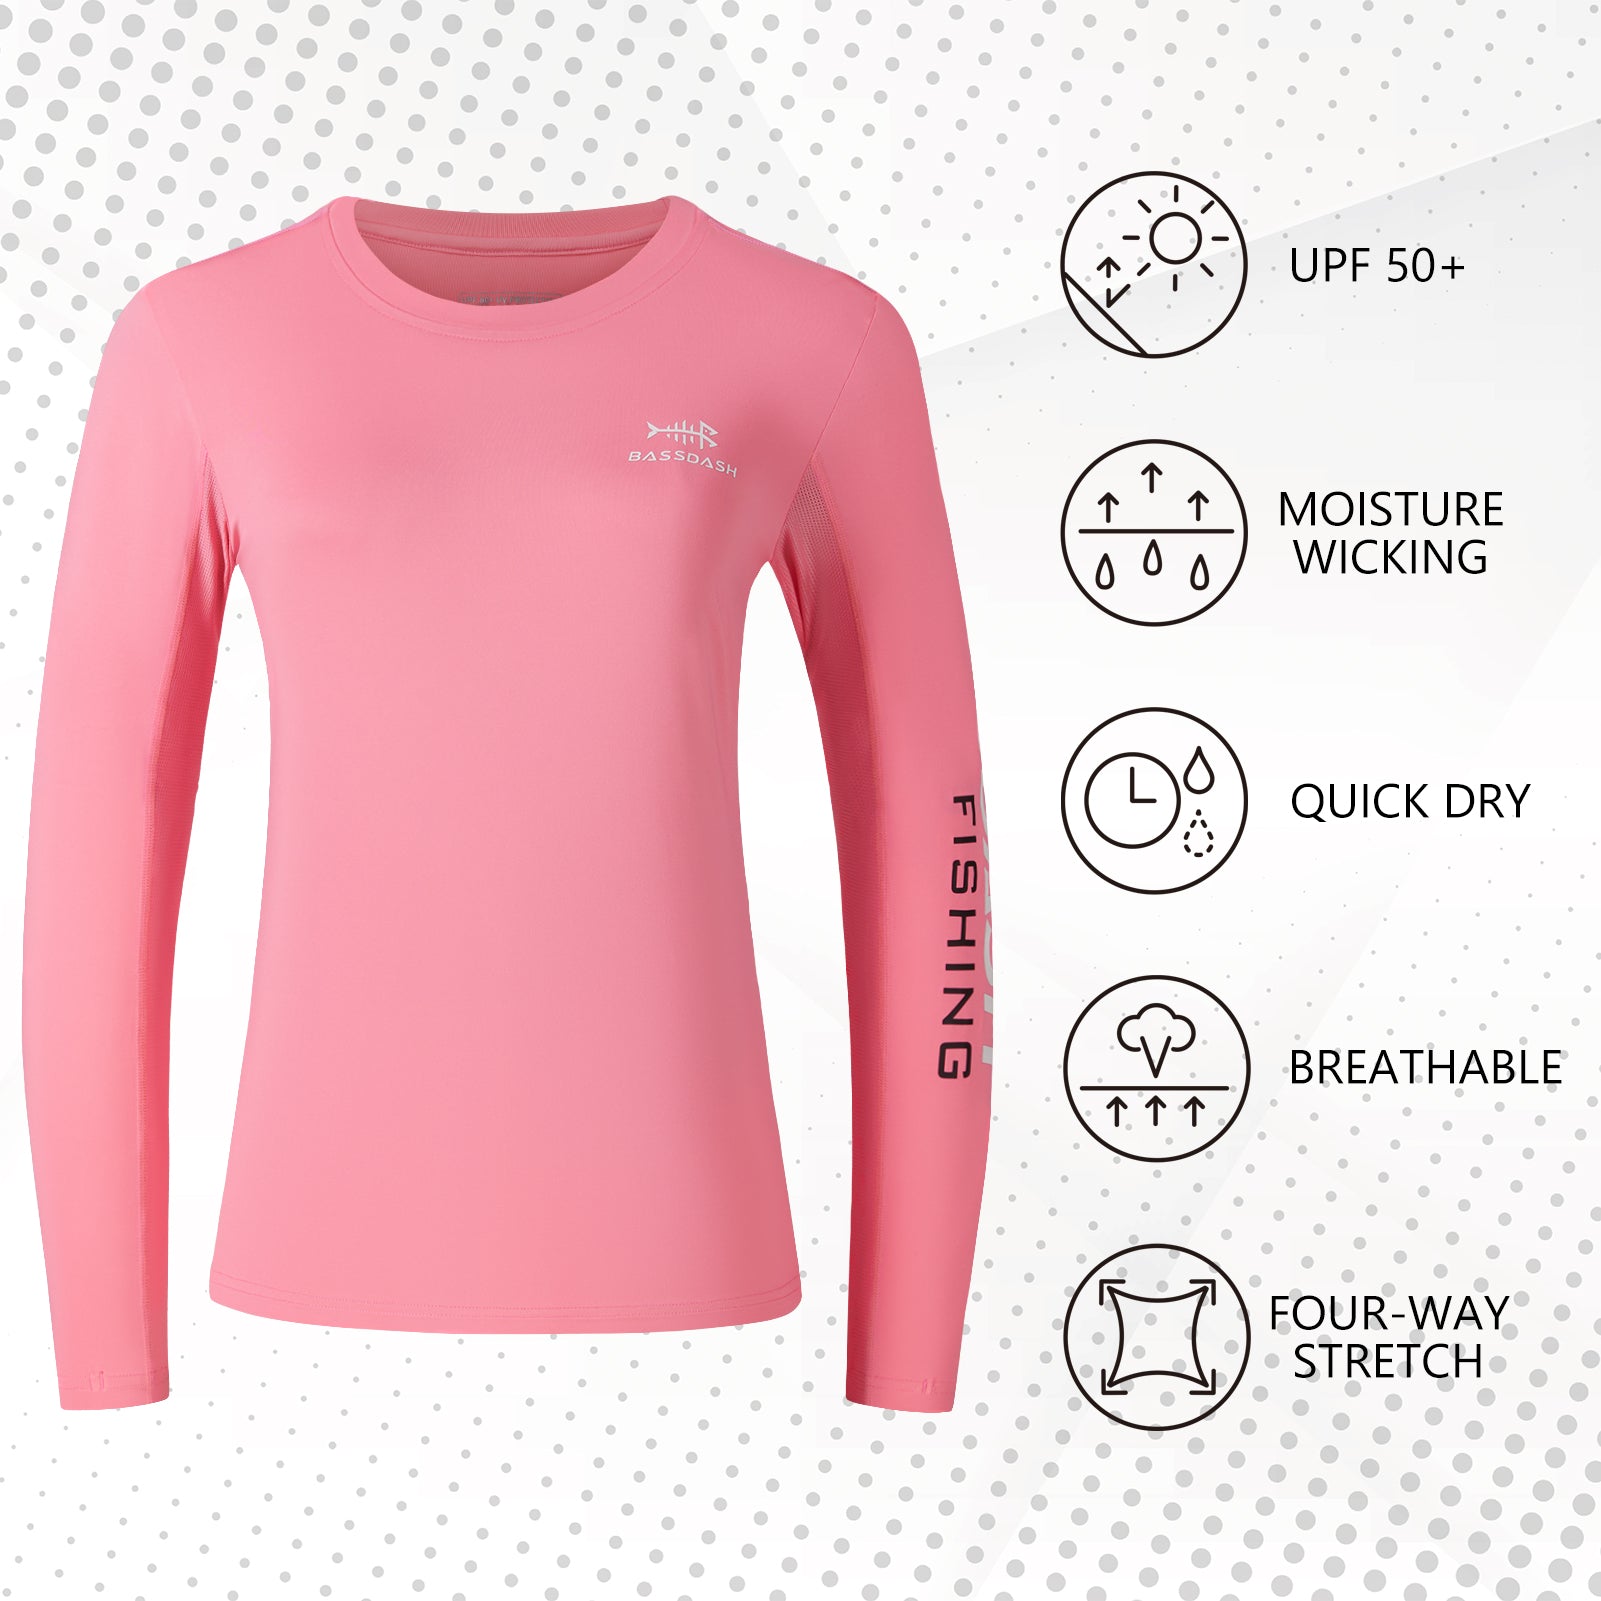  Womens UV Protection Shirts Running Shirts Women Gym Shirts  Athletic Shirts Women Long Sleeve Shirts Performance Rashguard Tee Shirt  Light Pink